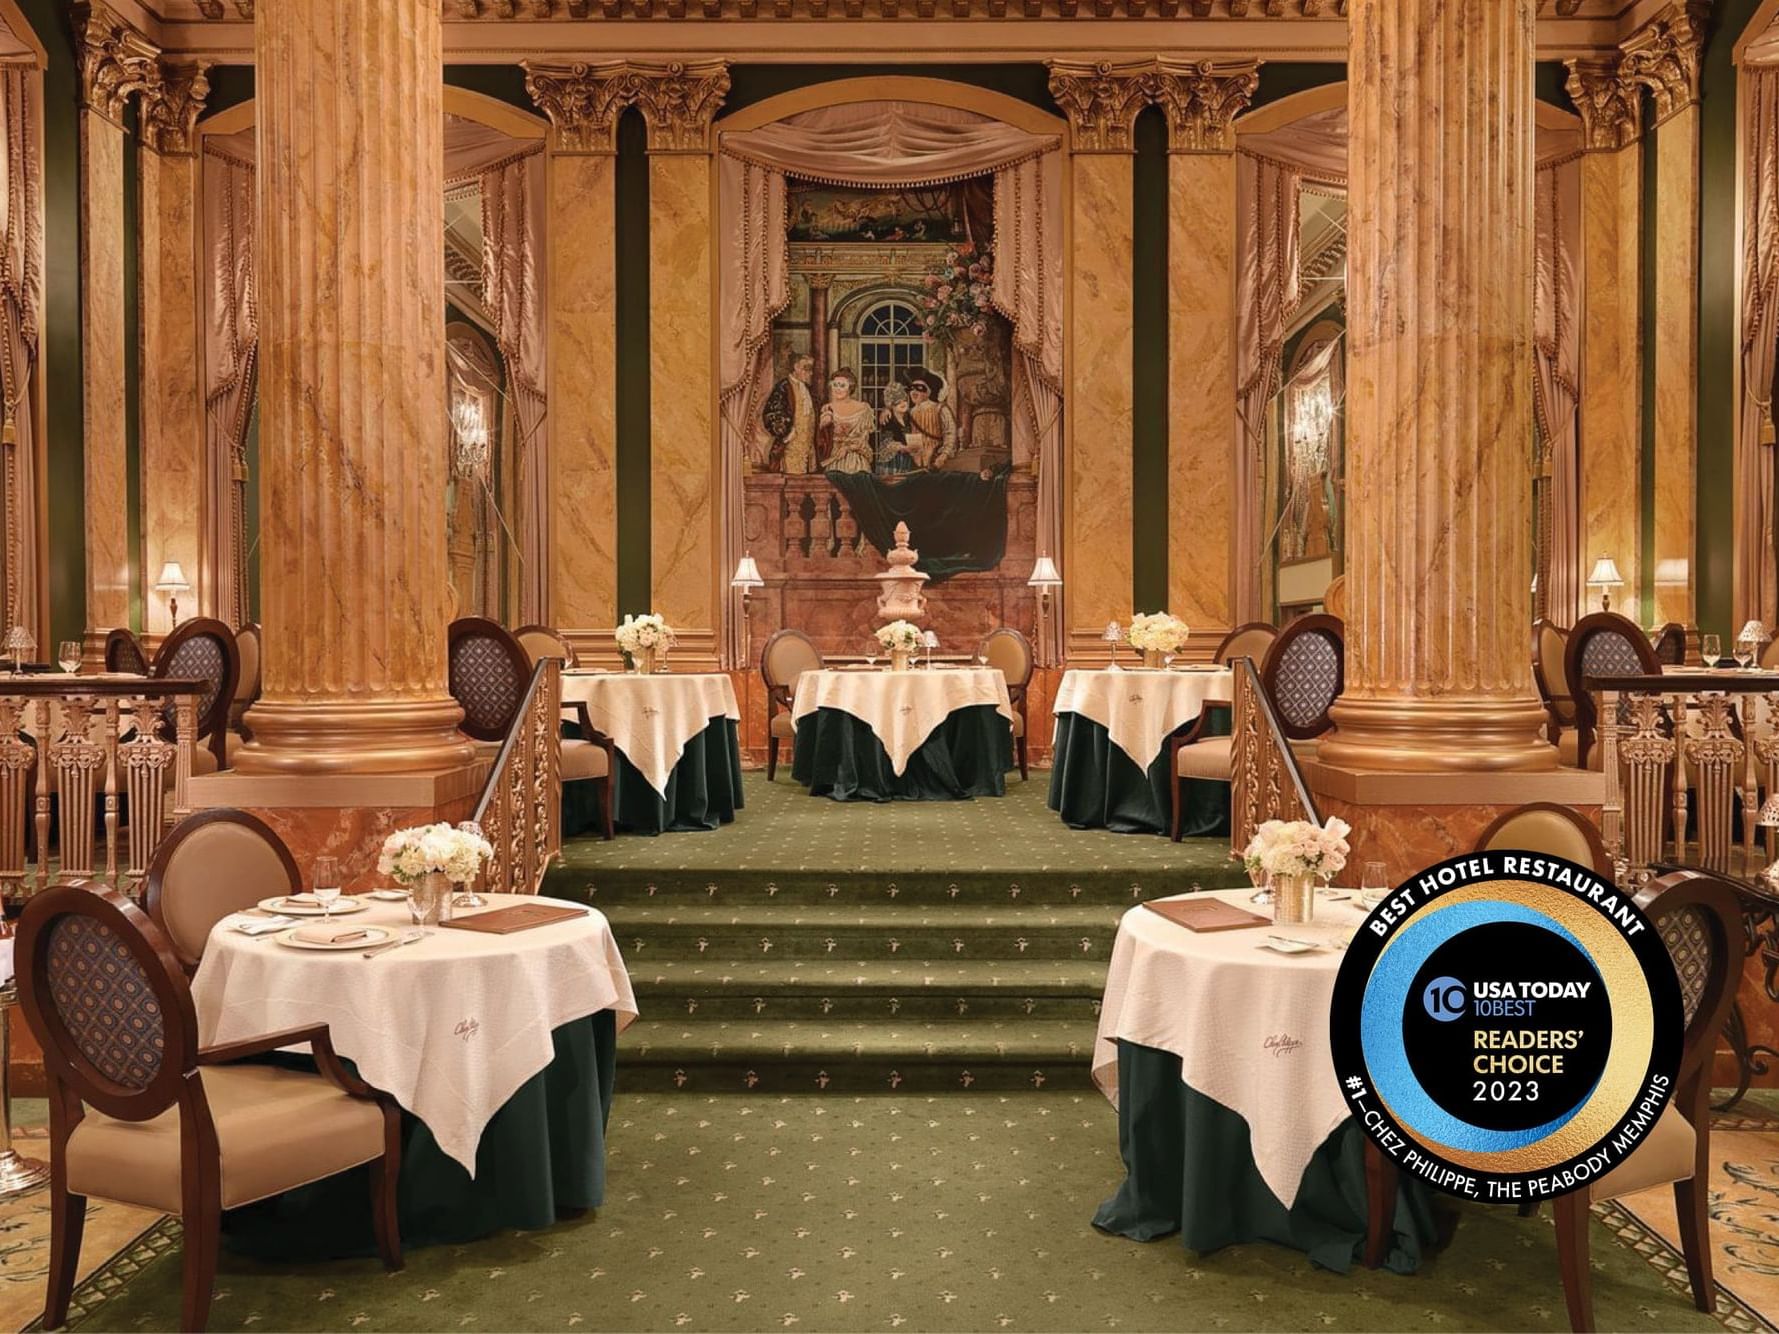 Chez Philippe Voted #1 Hotel Restaurant in USA